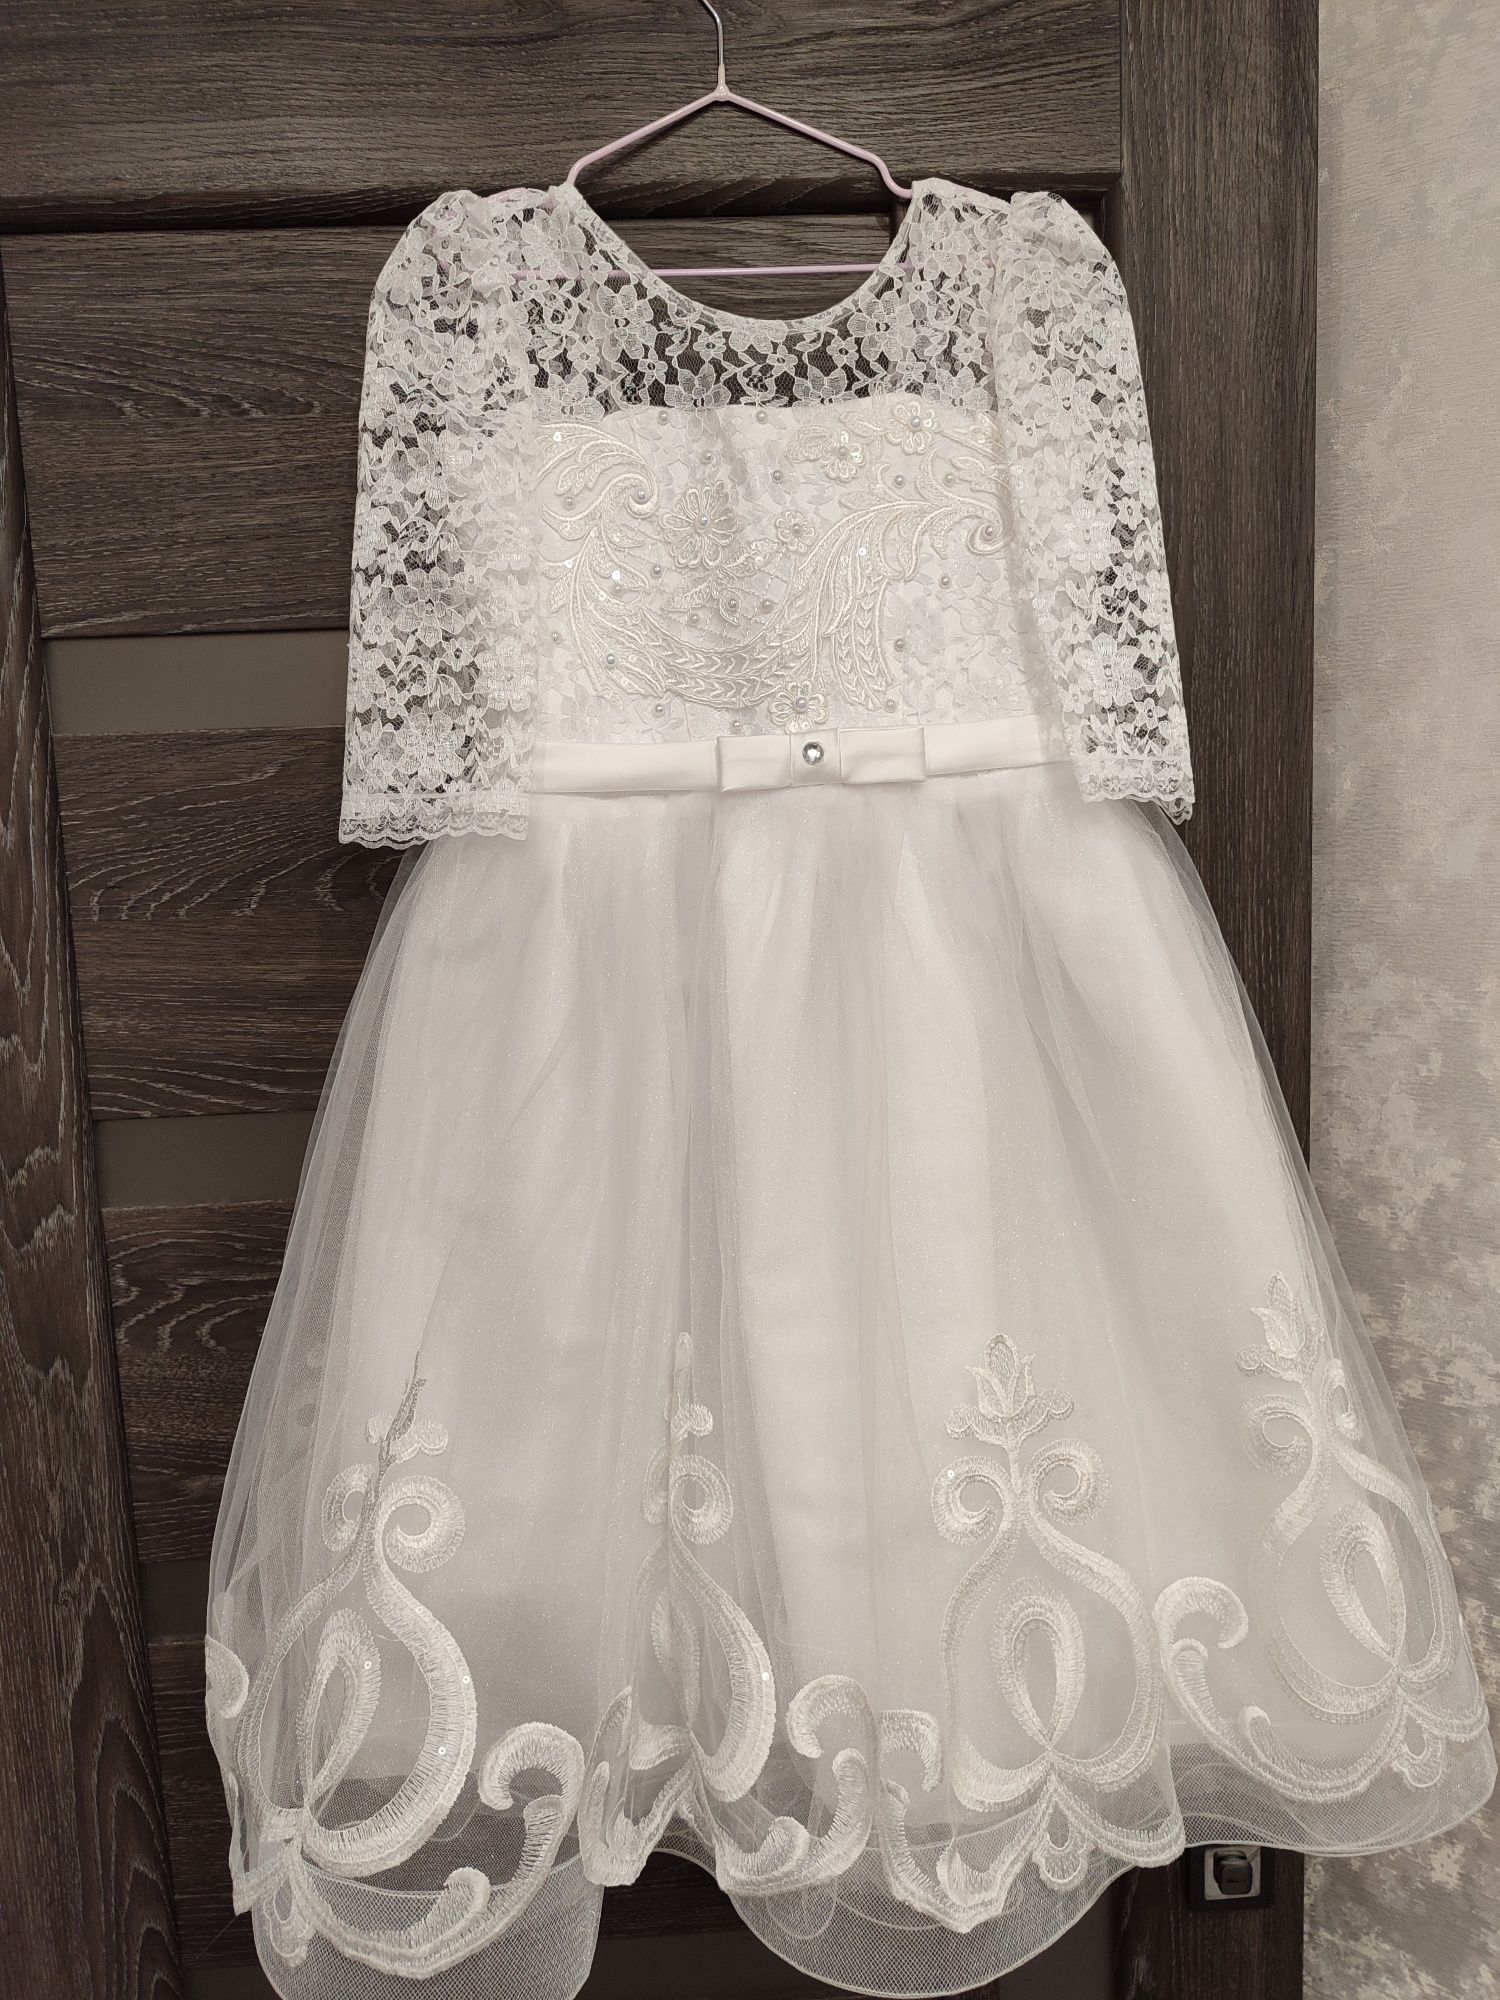 Красива біла сукня